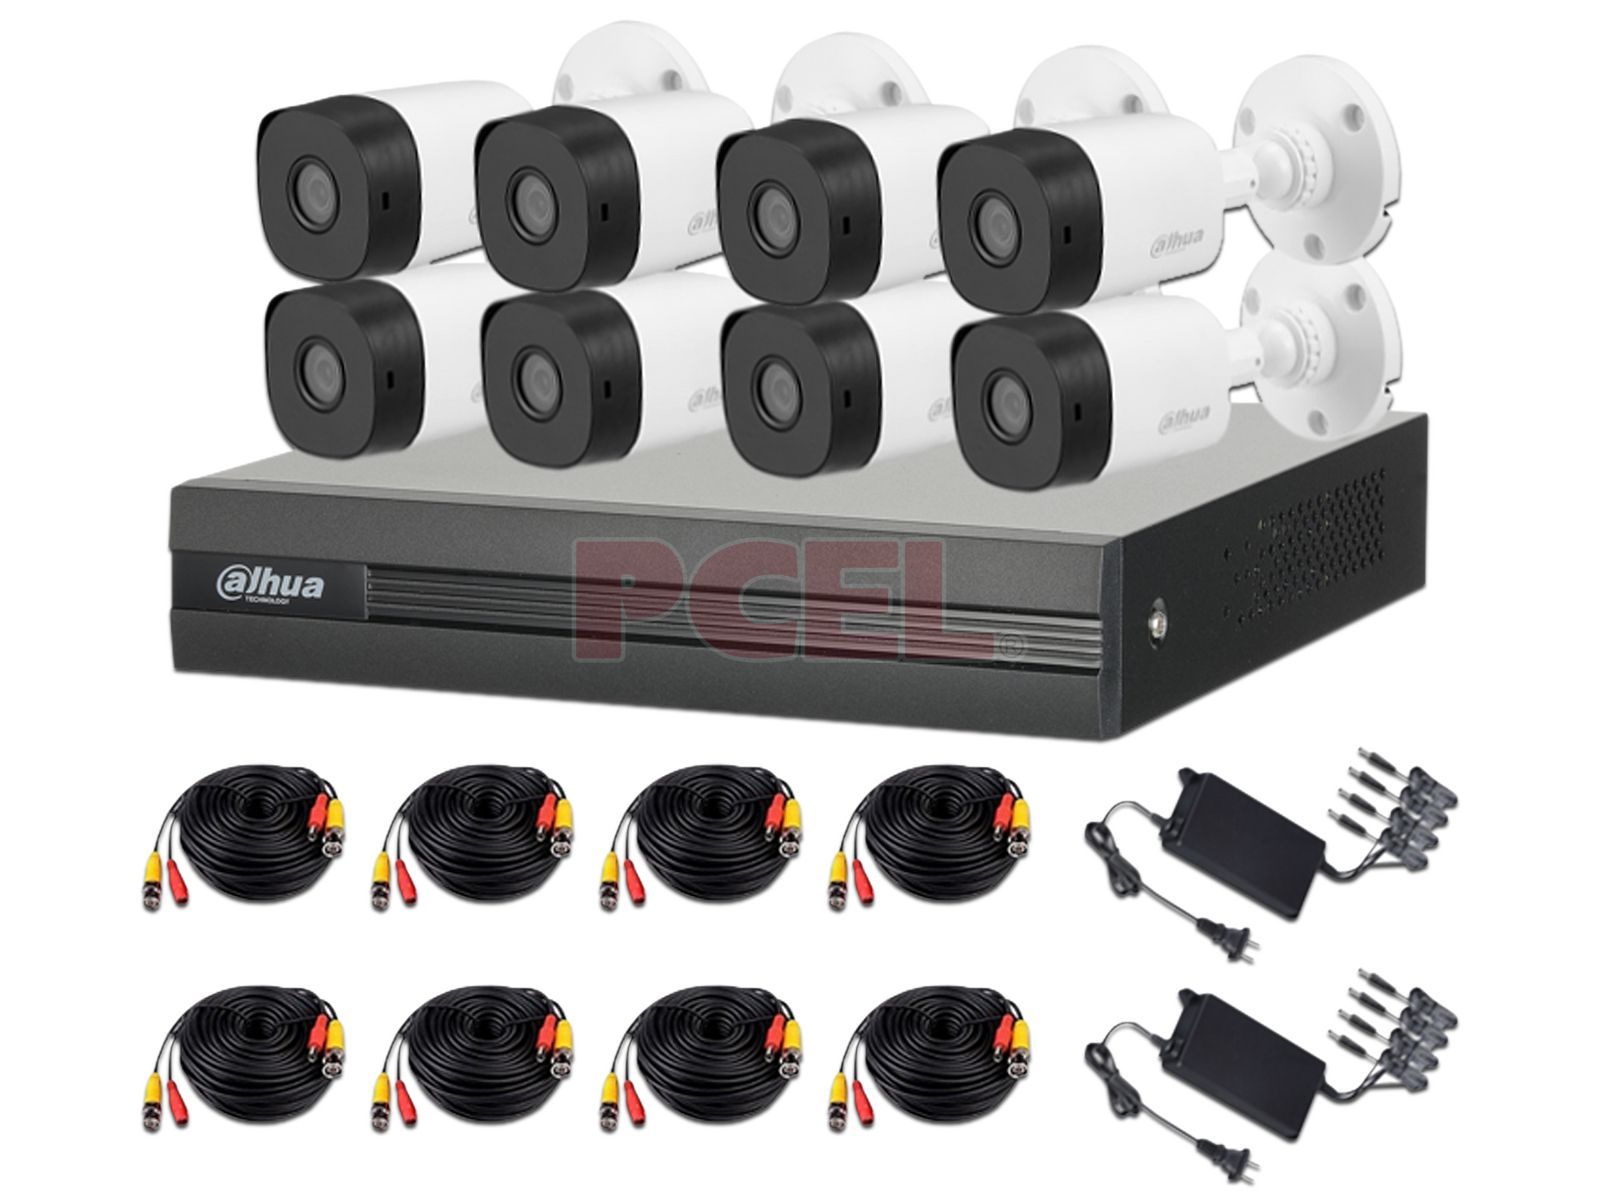 Kit de Videovigilancia DAHUA KITXVR1B08- I+8-B1A21, DVR de 8 Canales, 2 MP, H.265+. Incluye Cámaras B1A21 con Accesorios Incluidos.